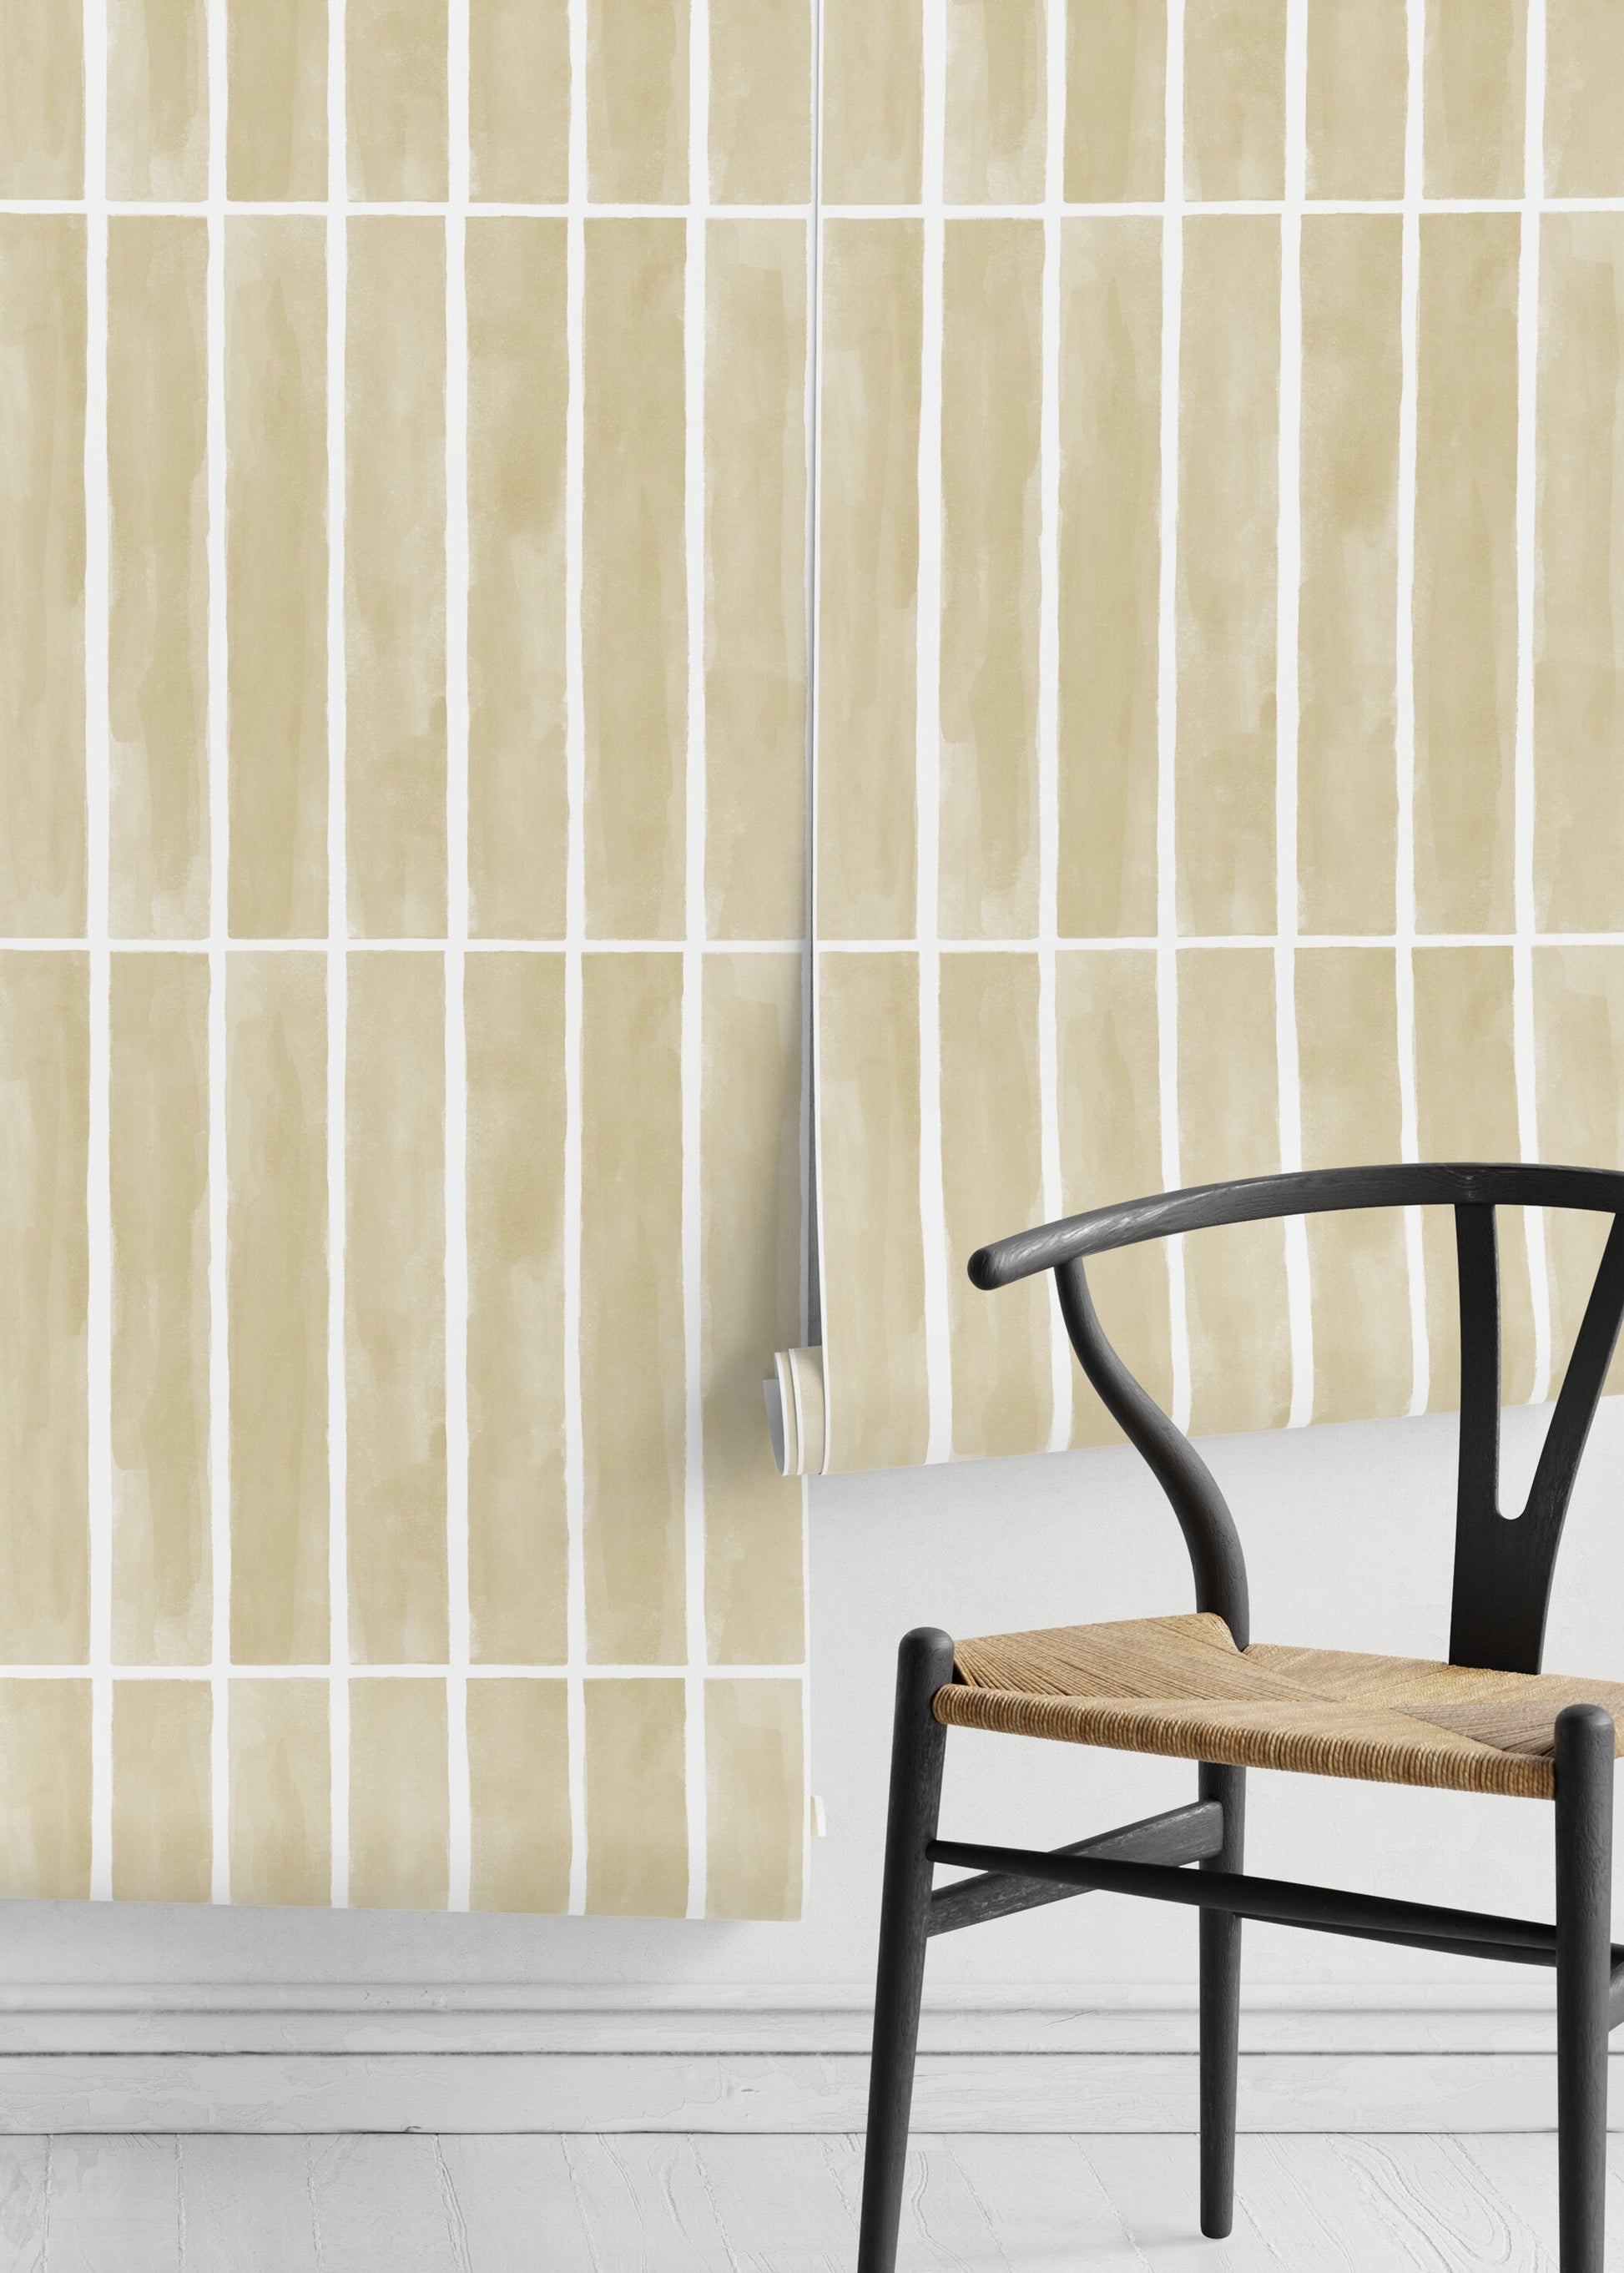 Yellow Modern Striped Wallpaper / Peel and Stick Wallpaper Removable Wallpaper Home Decor Wall Art Wall Decor Room Decor - D324